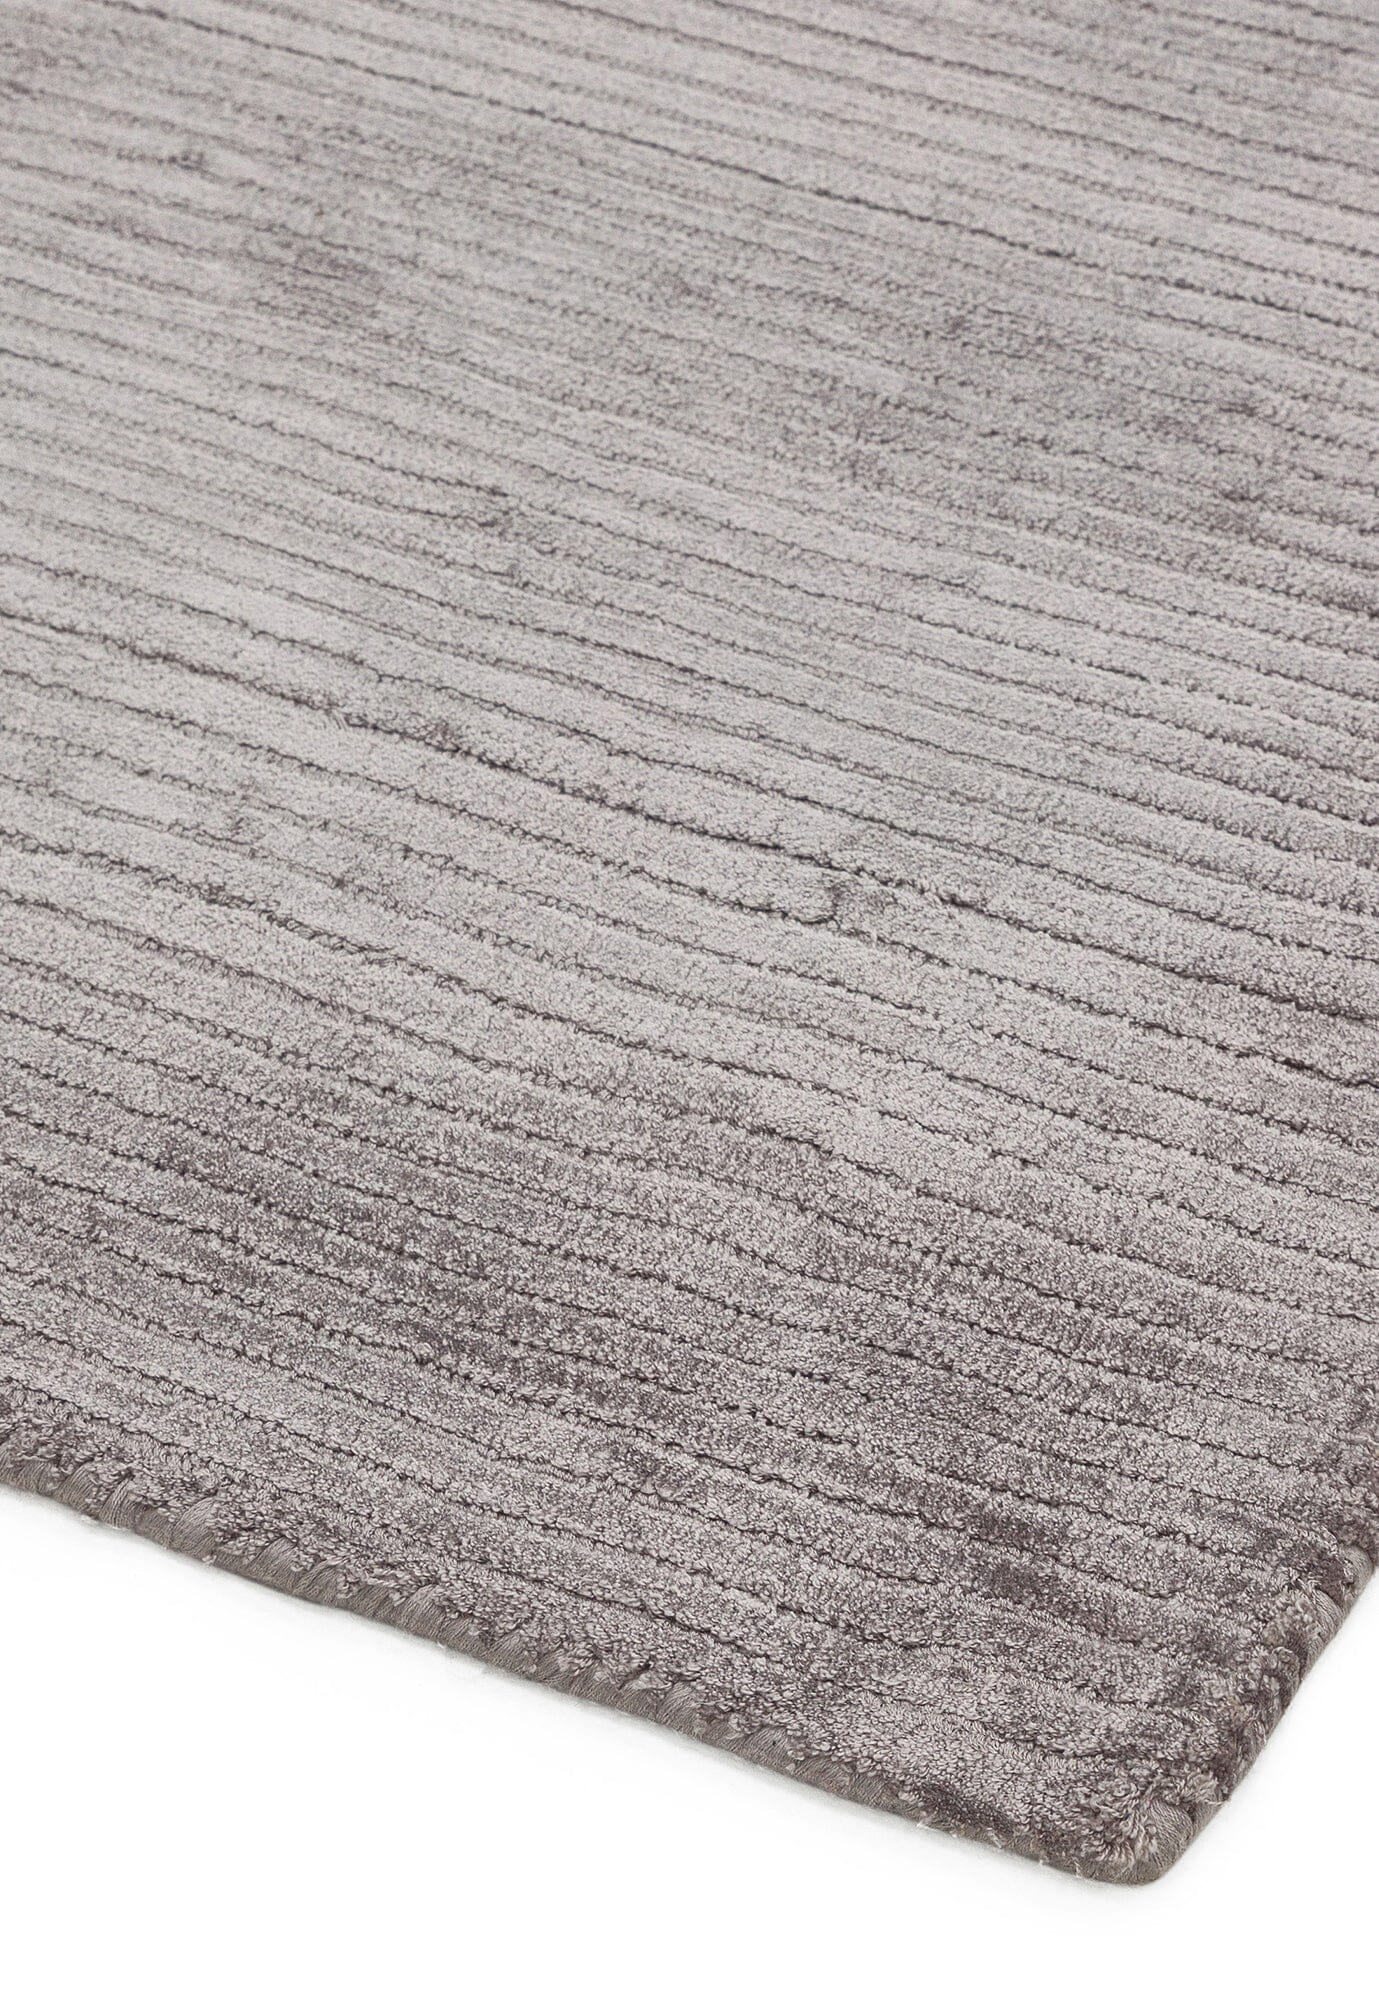  Asiatic Carpets-Asiatic Carpets Bellagio Hand Woven Rug Silver - 120 x 180cm-Grey, Silver 621 